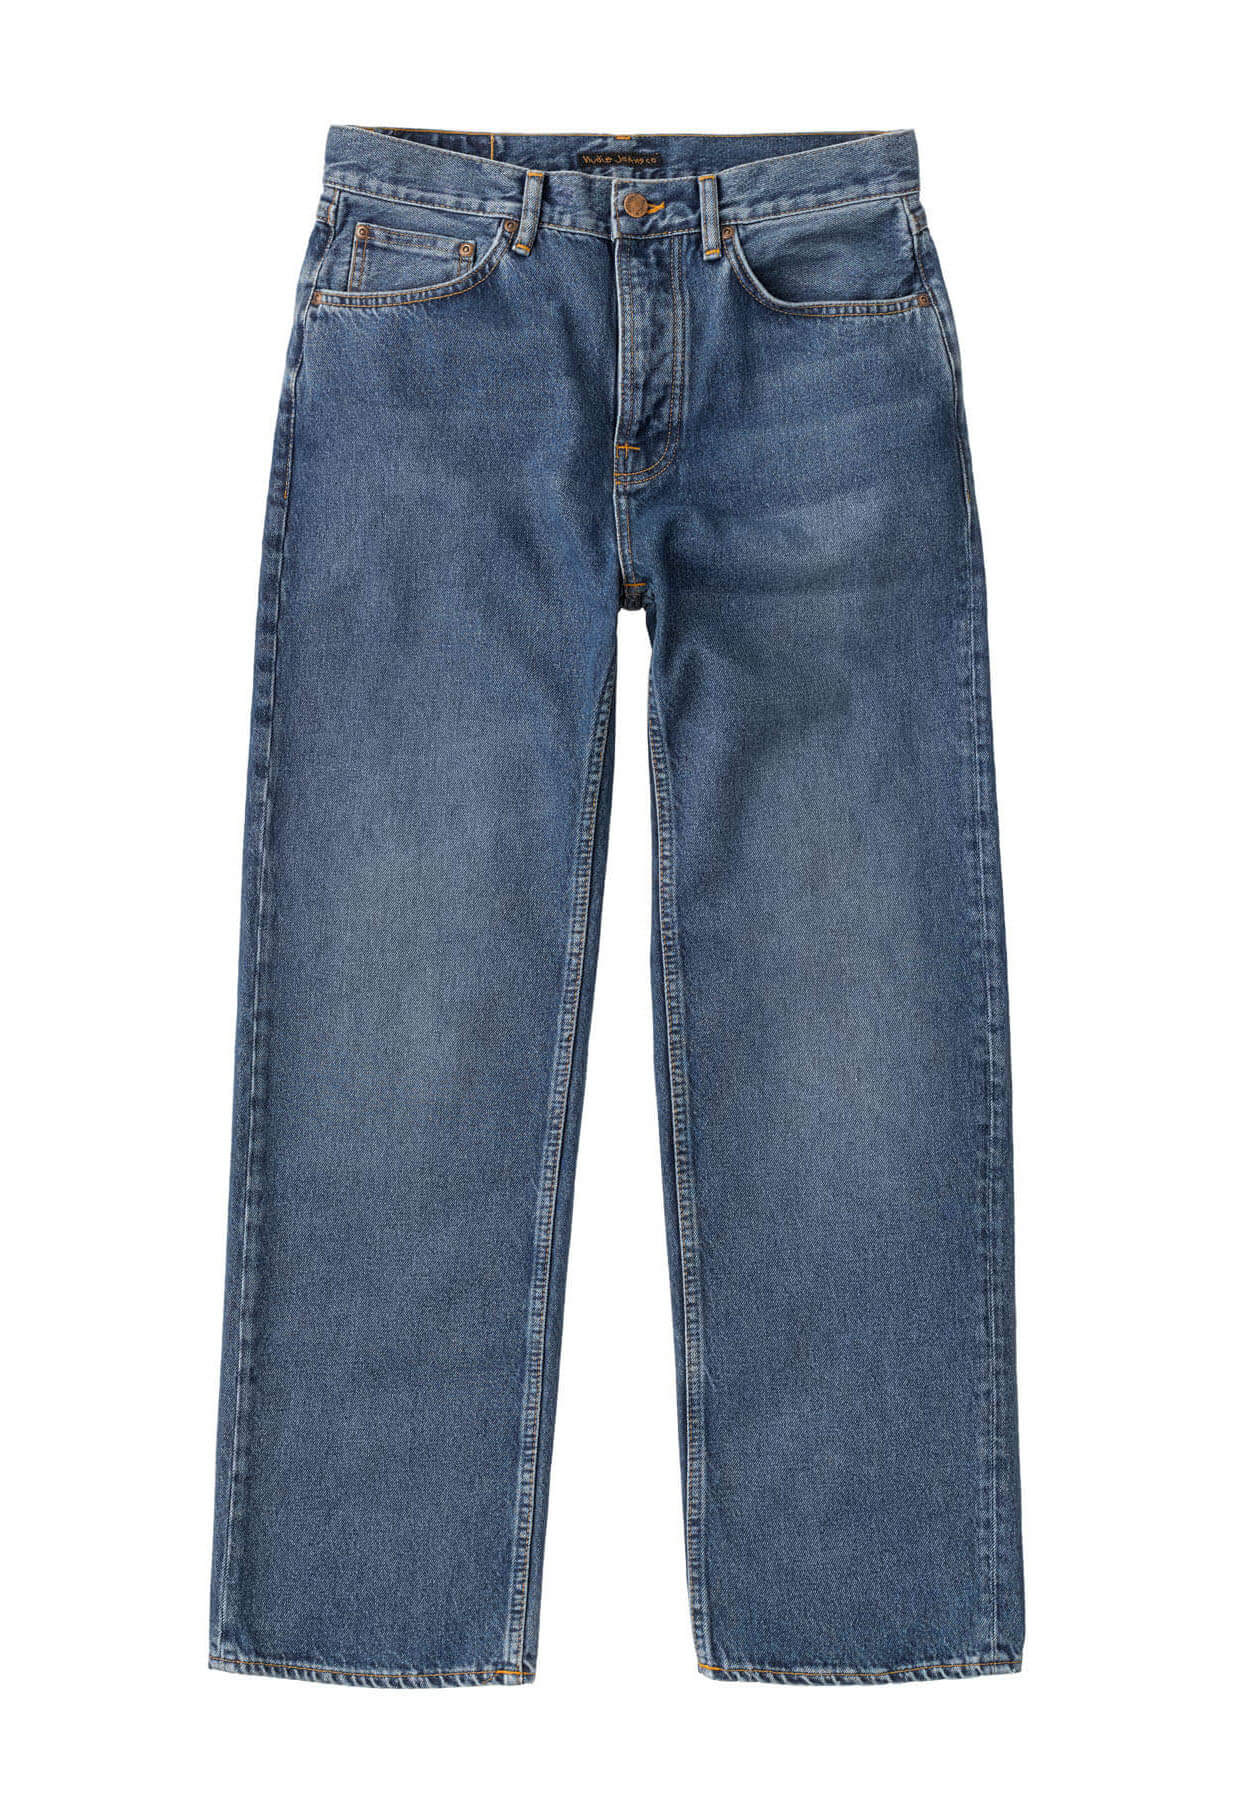 NUDIE JEANS Jeans Tuff Tony coastal worn 31/30